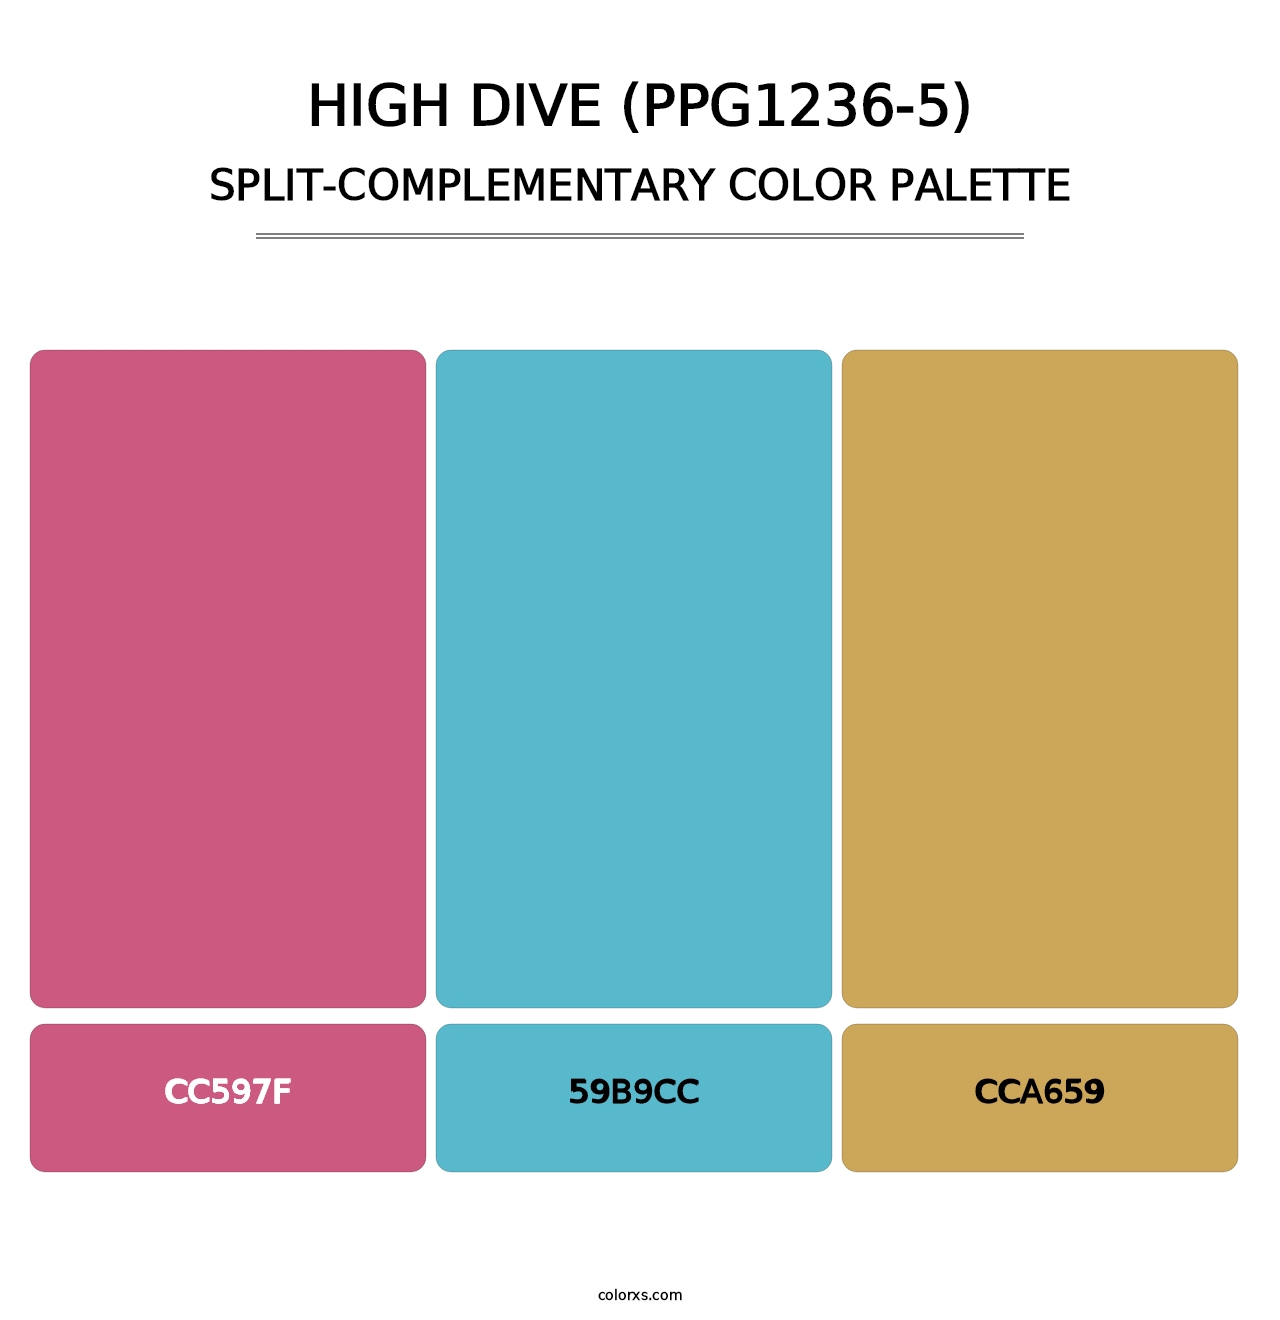 High Dive (PPG1236-5) - Split-Complementary Color Palette